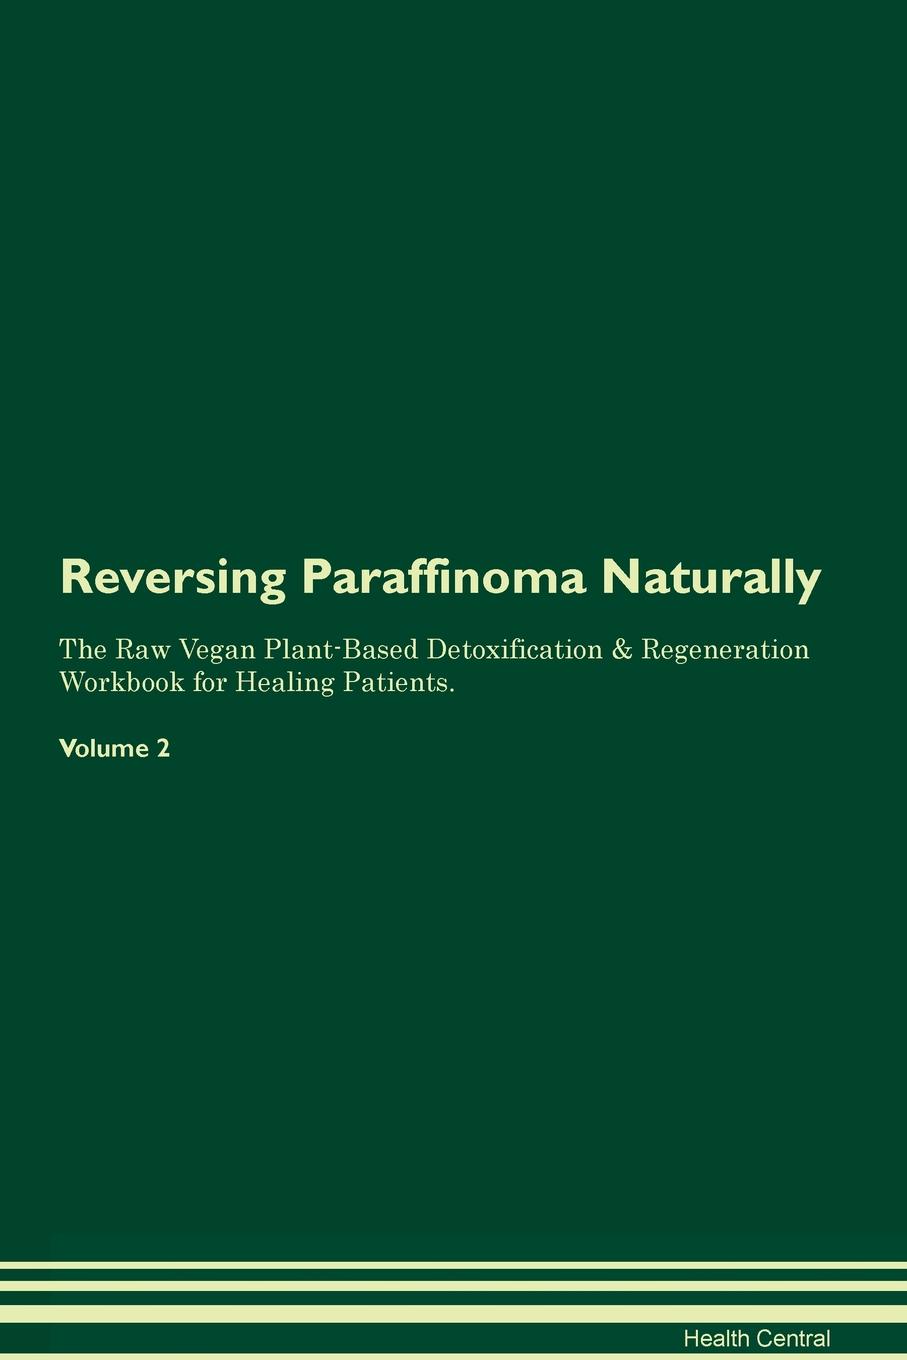 Reversing Paraffinoma Naturally The Raw Vegan Plant-Based Detoxification & Regeneration Workbook for Healing Patients. Volume 2